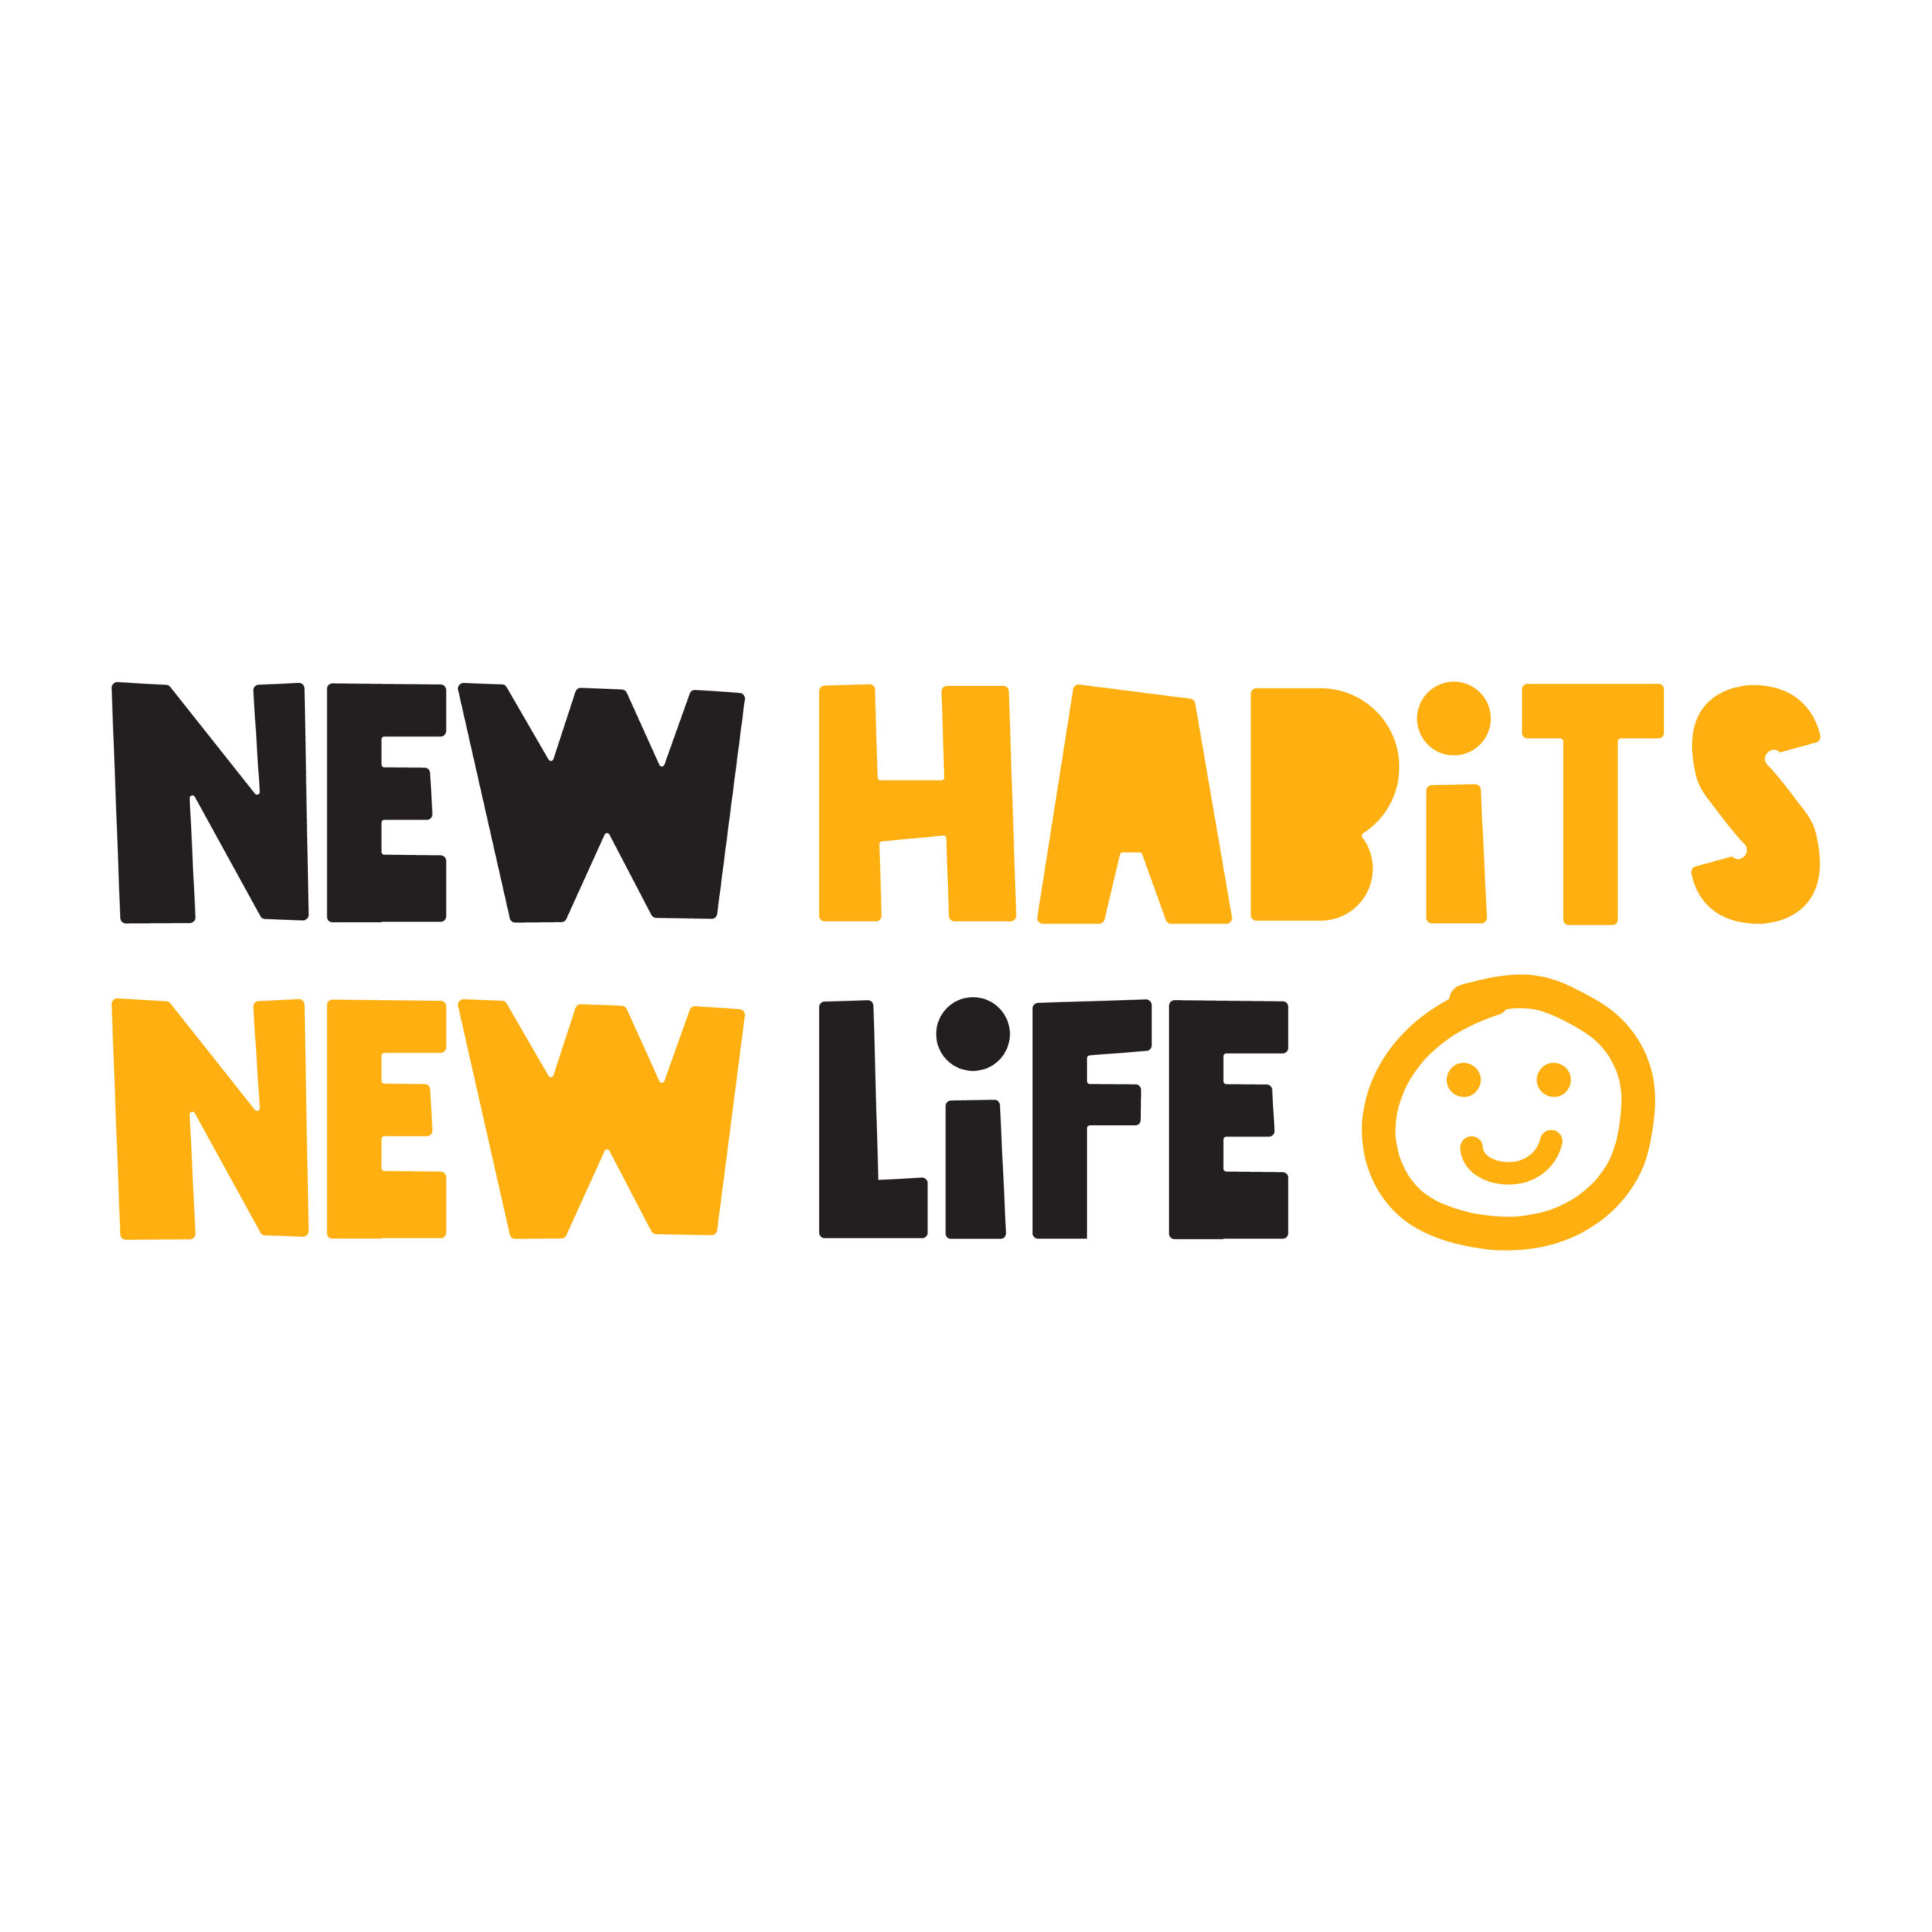 New habits new life